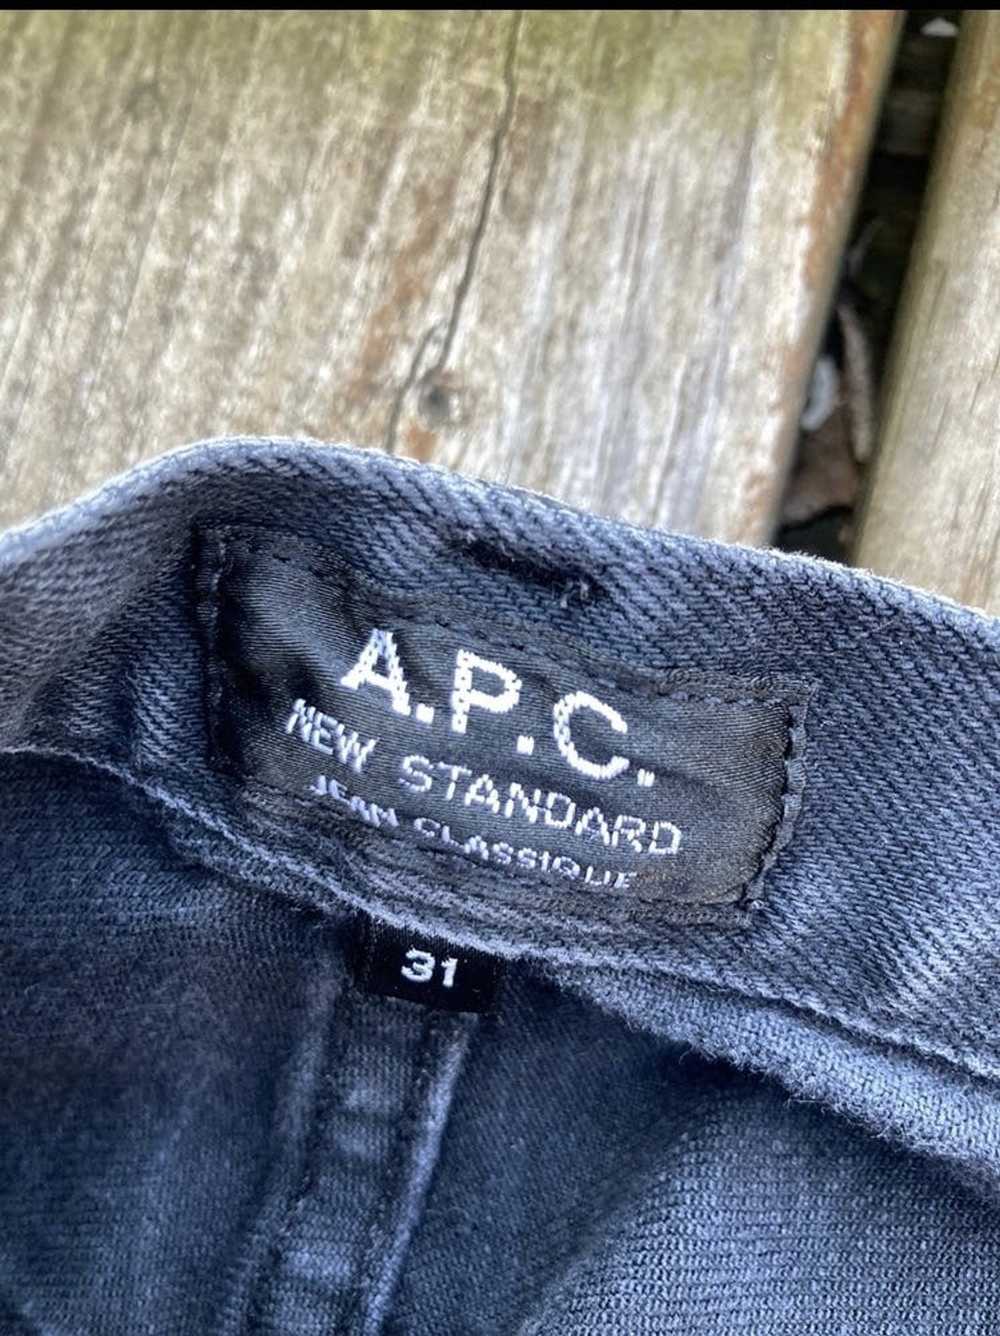 A.P.C. APC New Standard Black Jeans - image 3